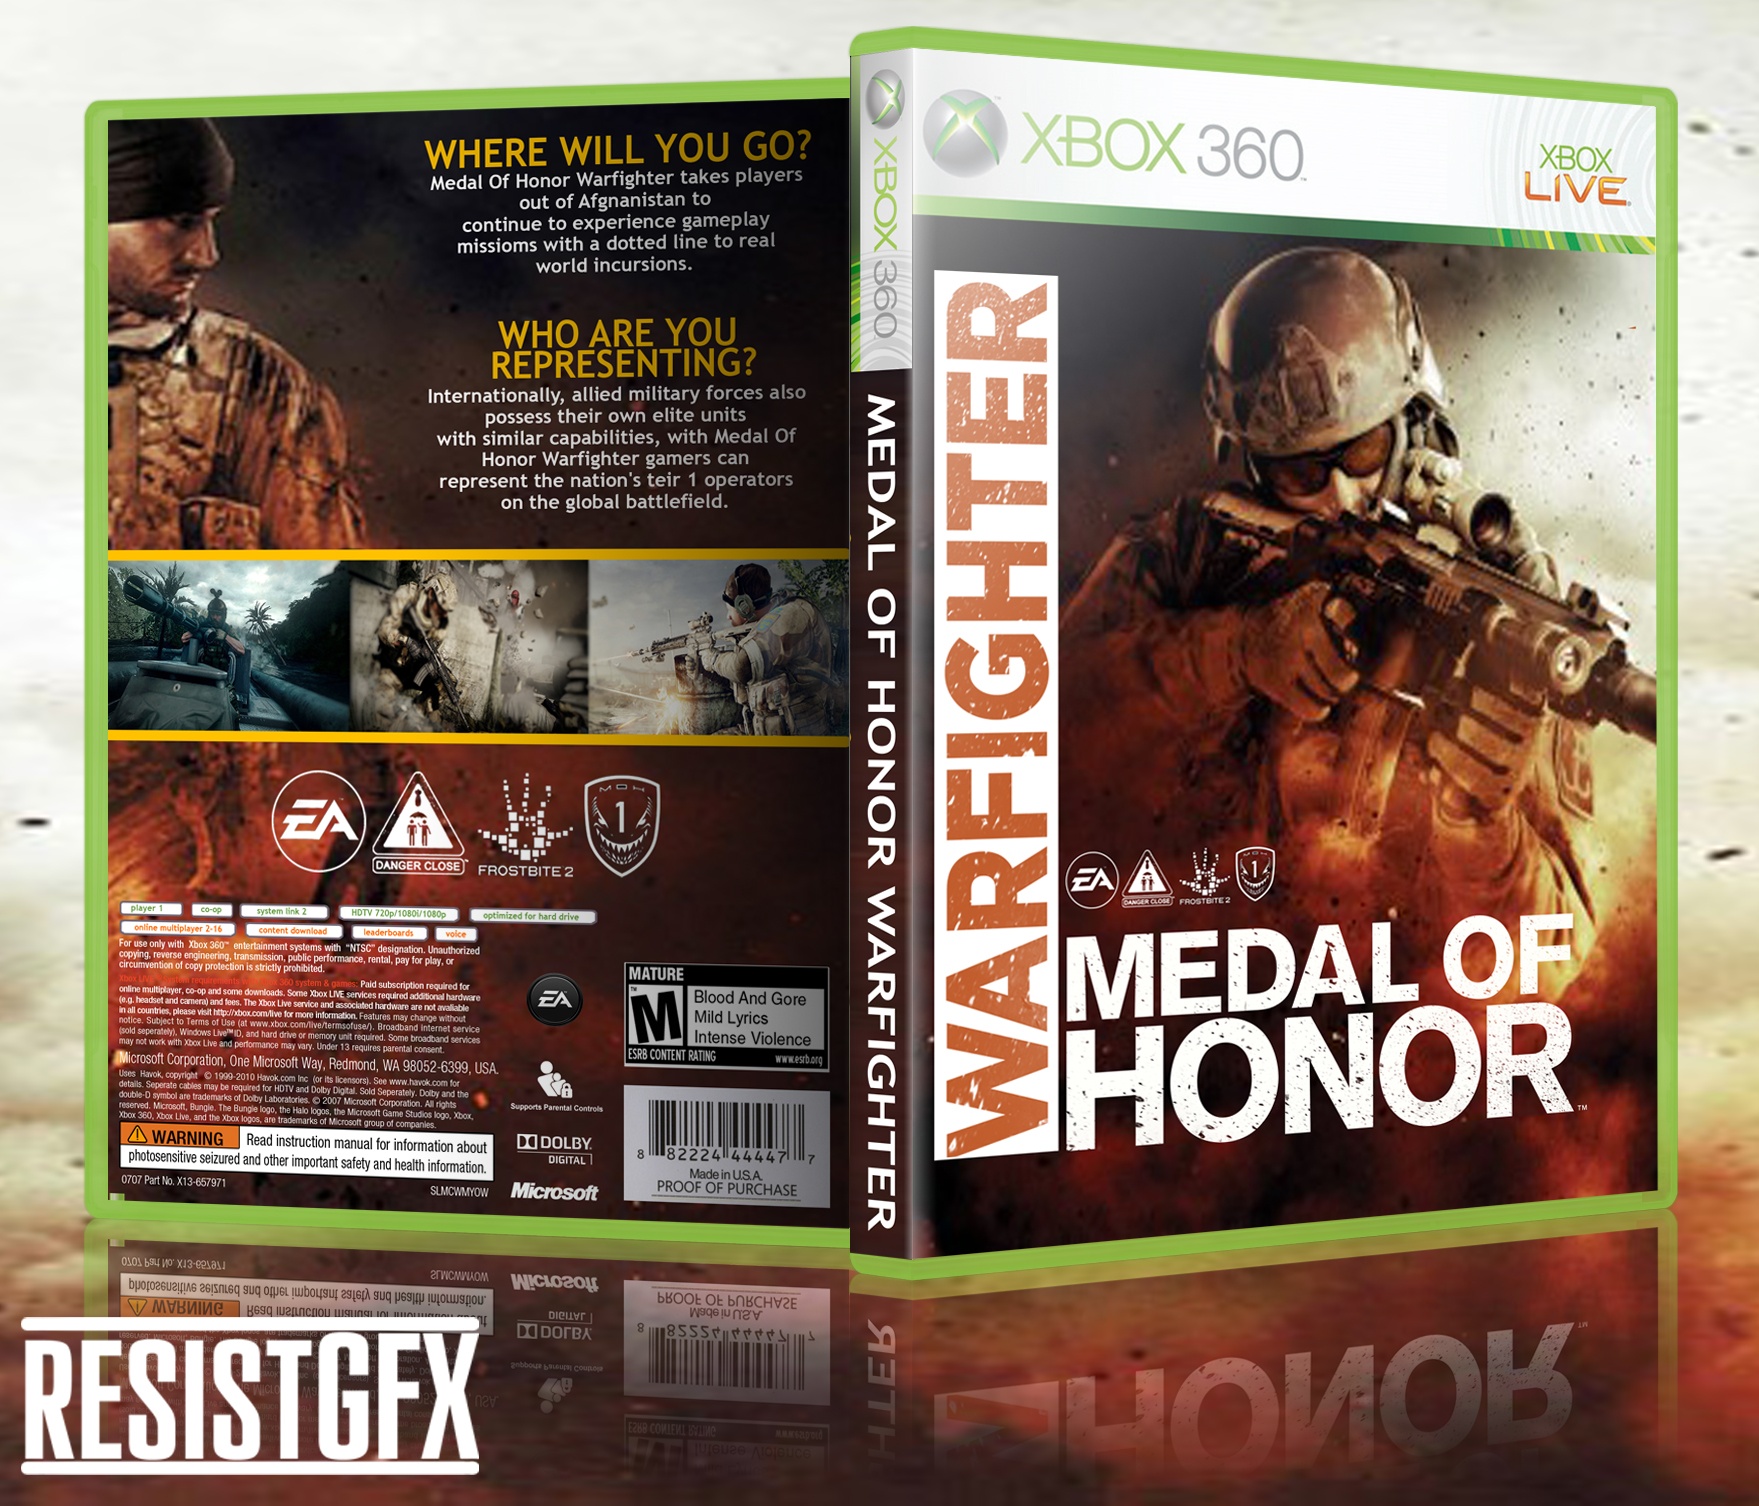 Medal of honor трейнер. Medal of Honor Xbox 360 обложка. Medal of Honor: Warfighter Xbox 360 обложка. Medal of Honor Xbox 360 обложка для дисков. Медаль за отвагу на хбокс 360.